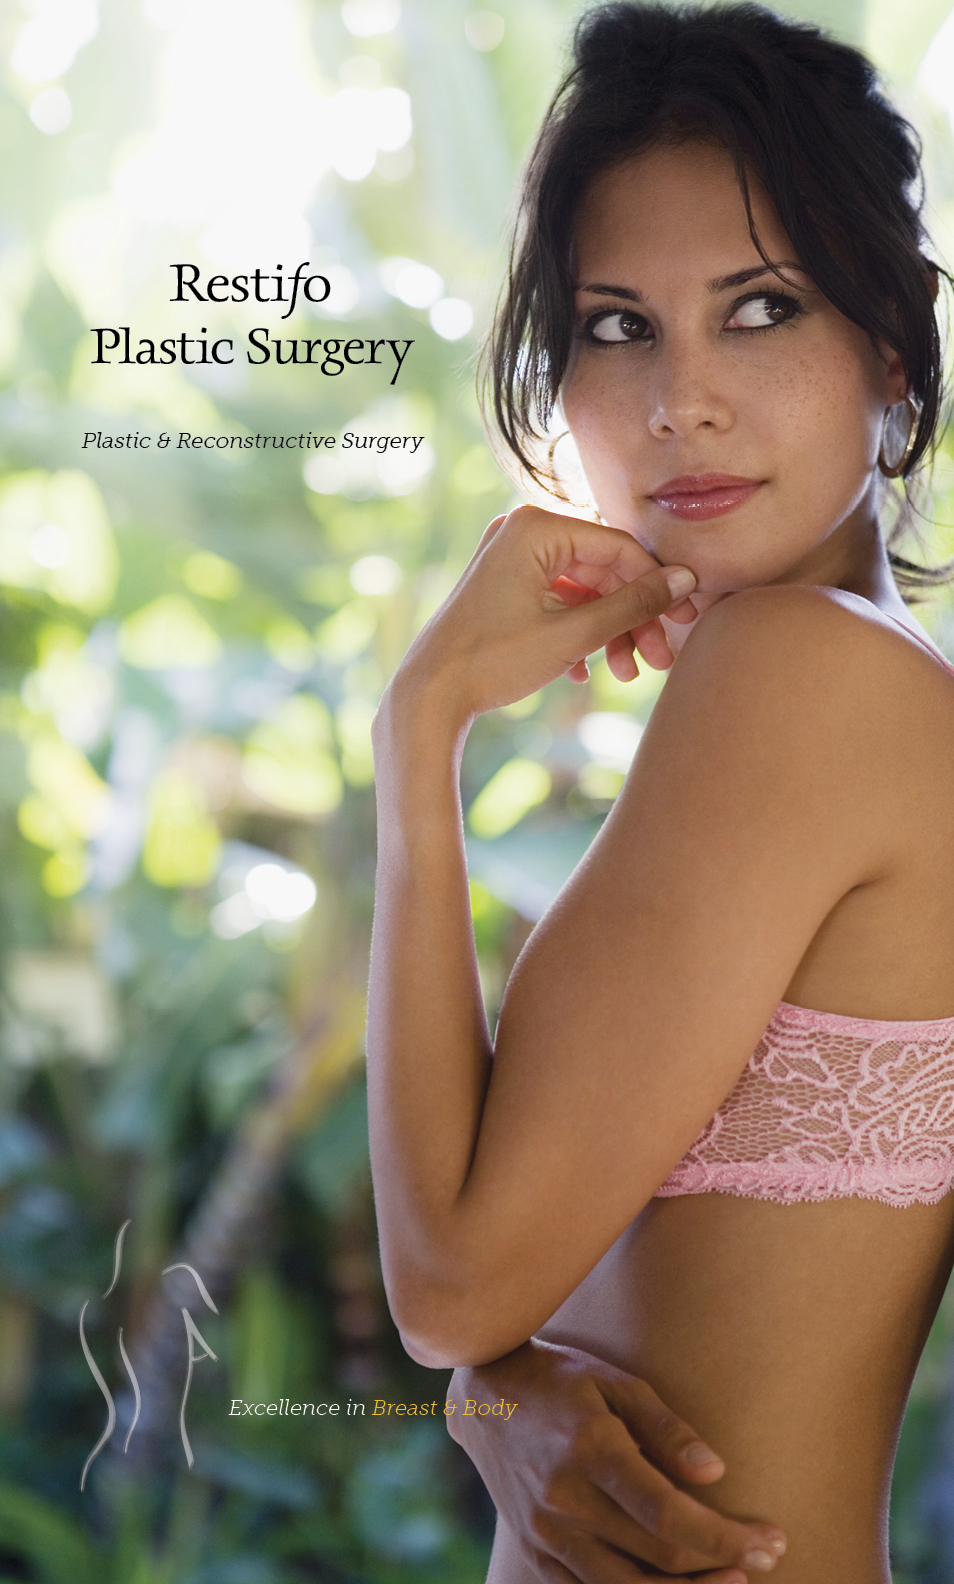 Restifo Plastic Surgery Brochure Graphic Design 02